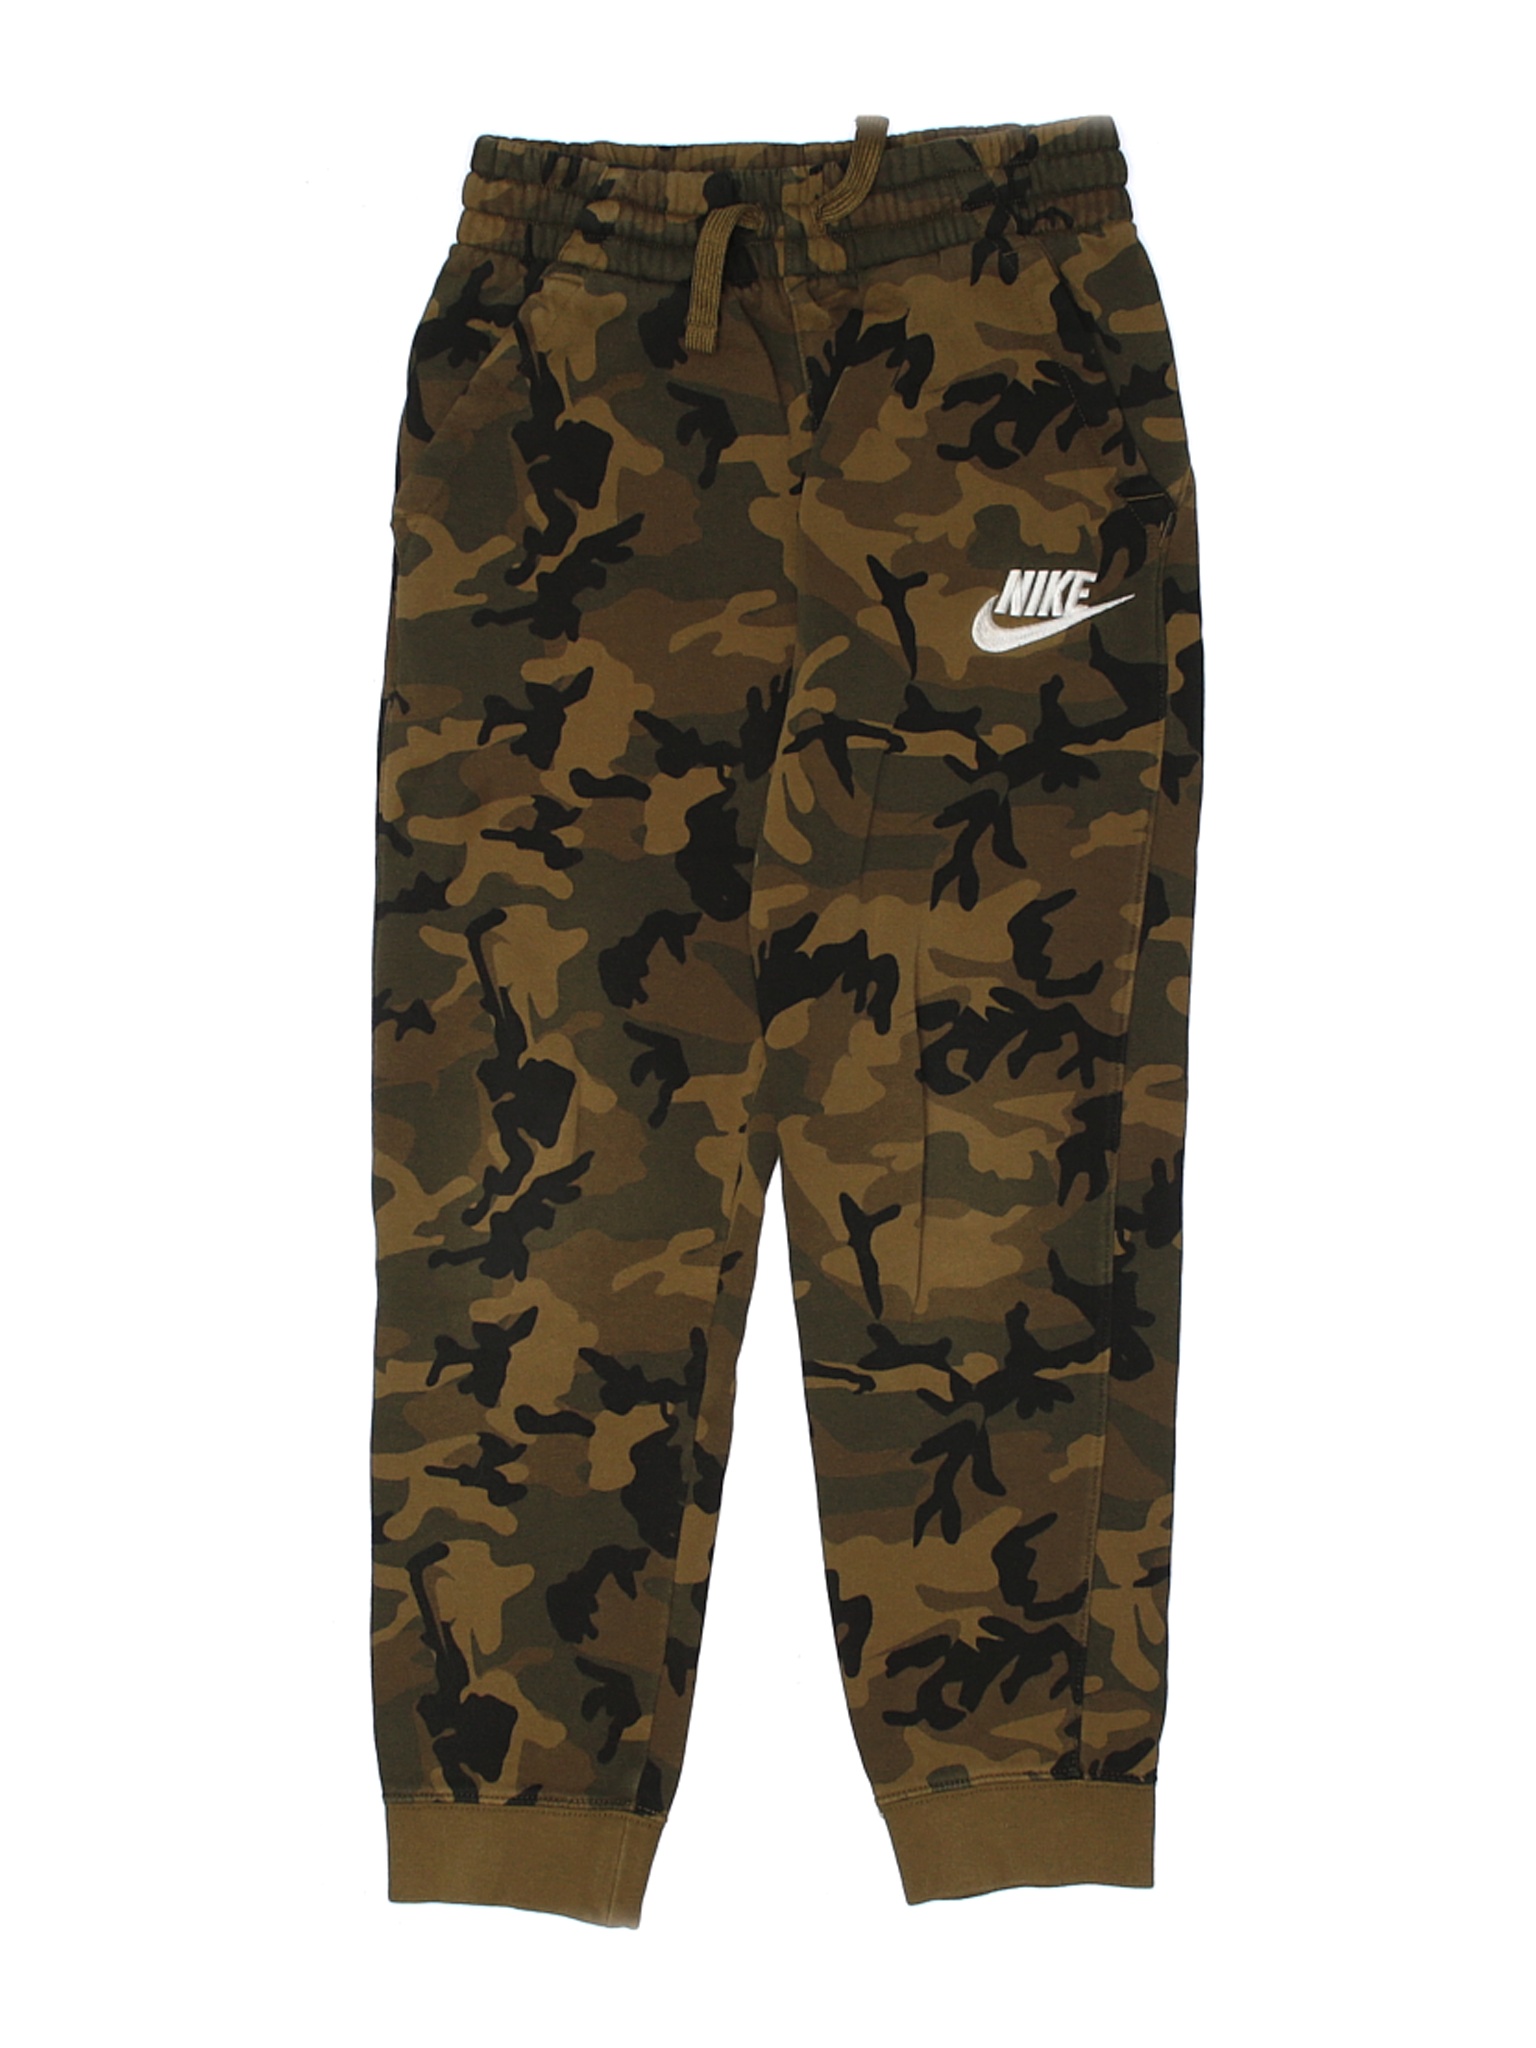 Nike Boys Green Sweatpants S Youth | eBay